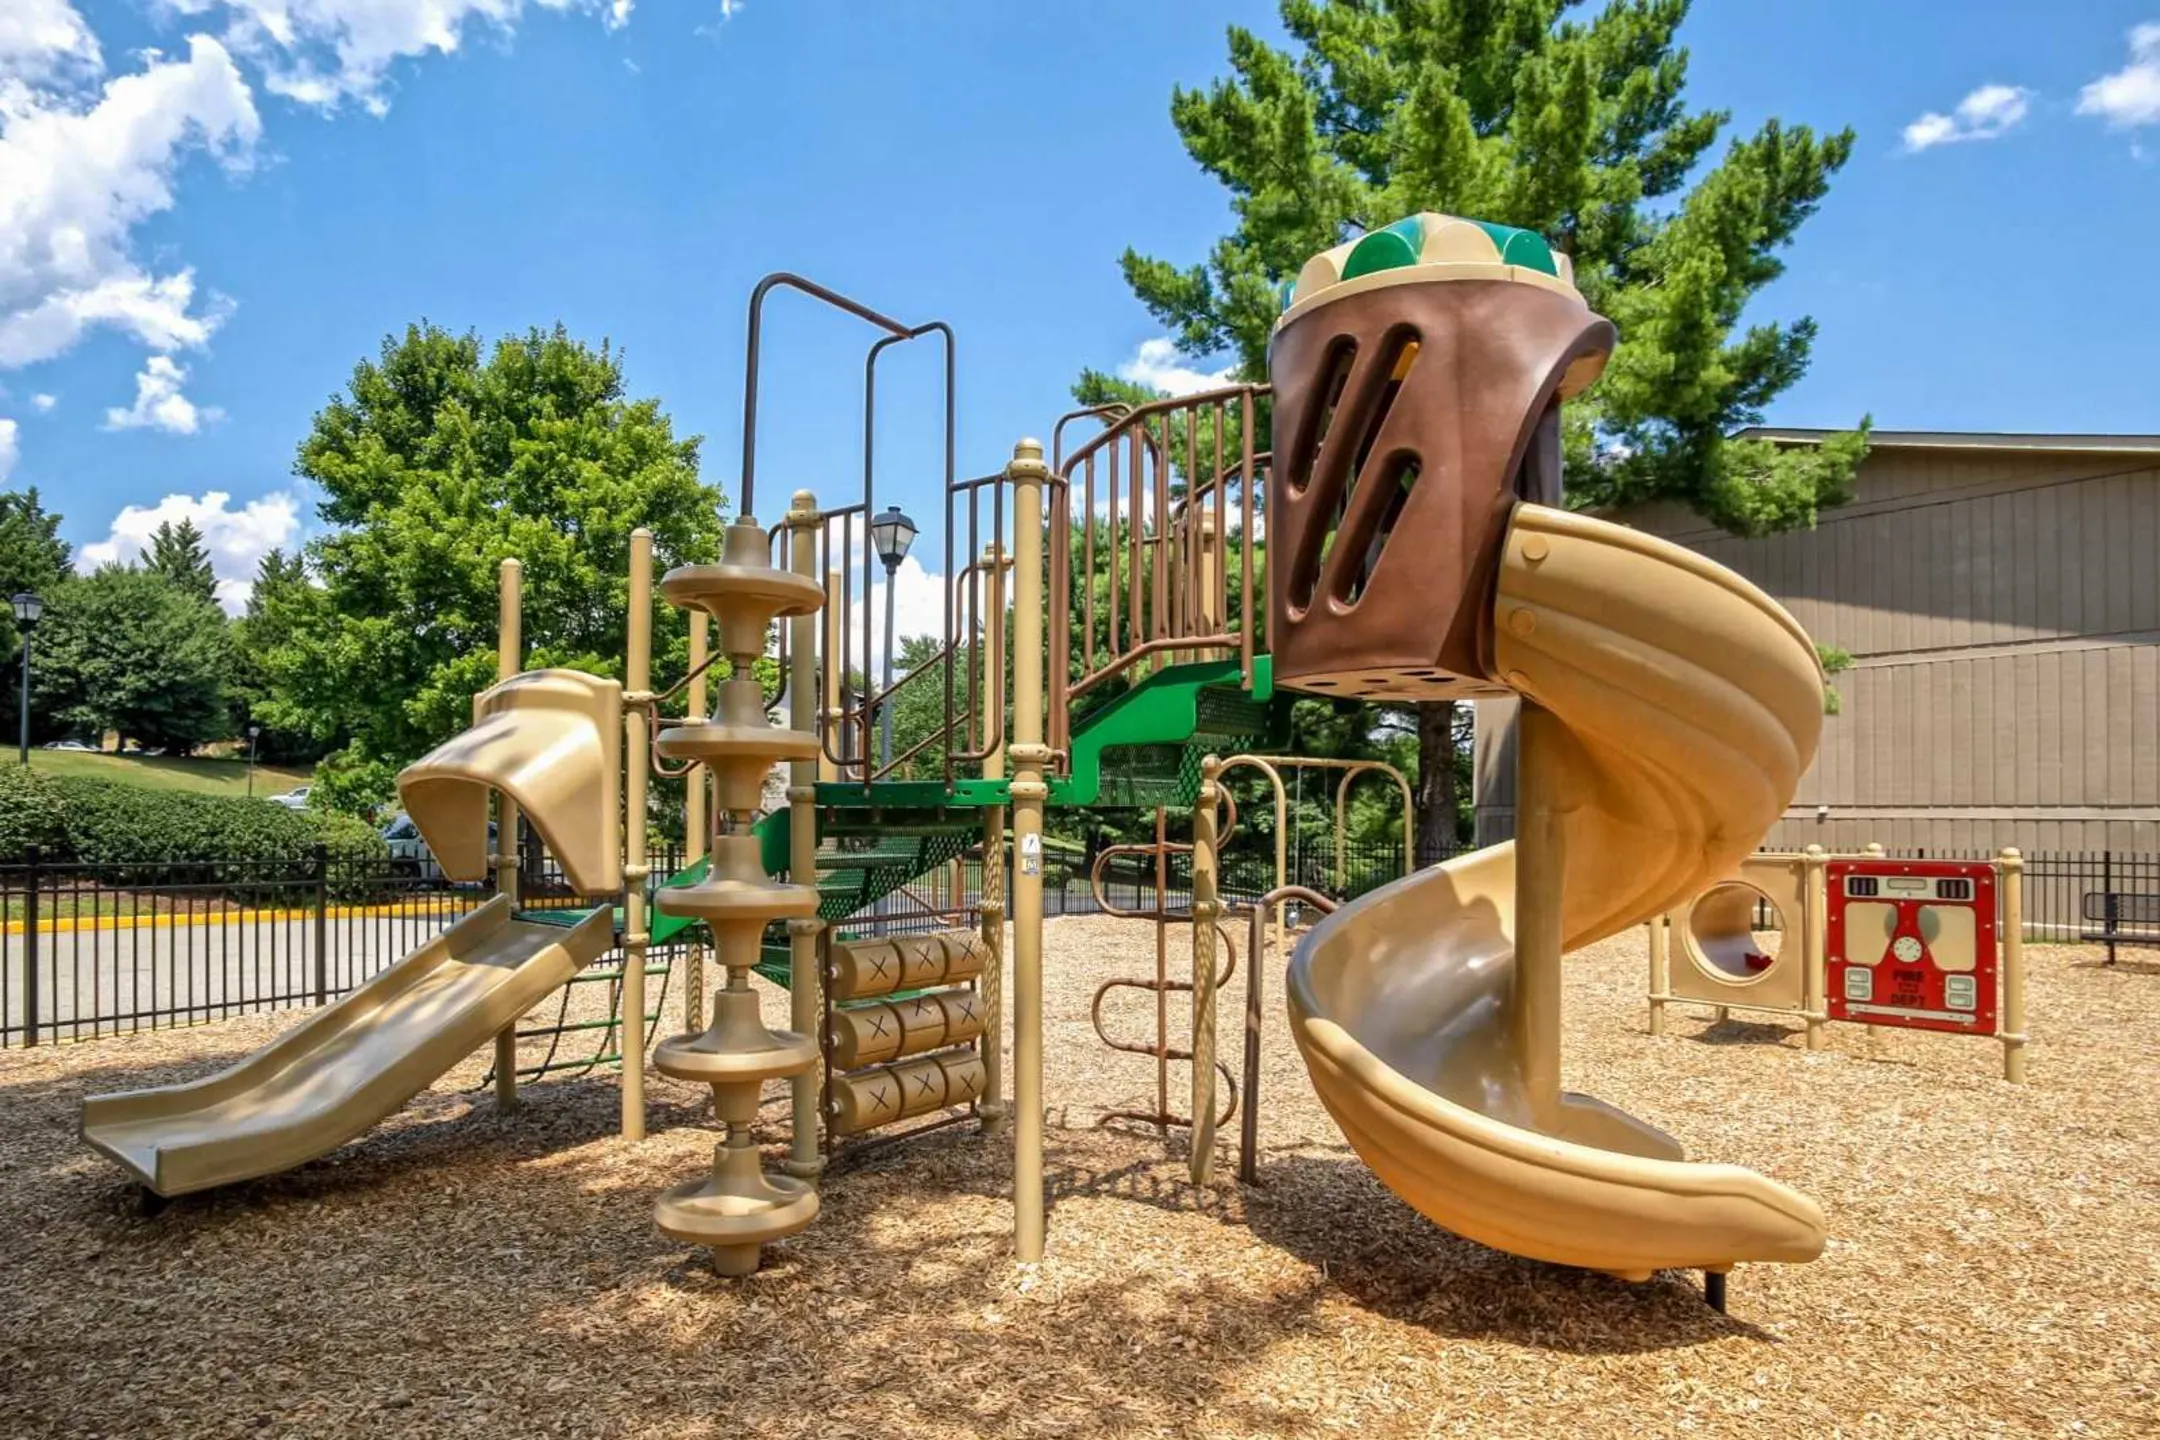 Playground - Pebble Creek Apartment Homes - Roanoke, VA